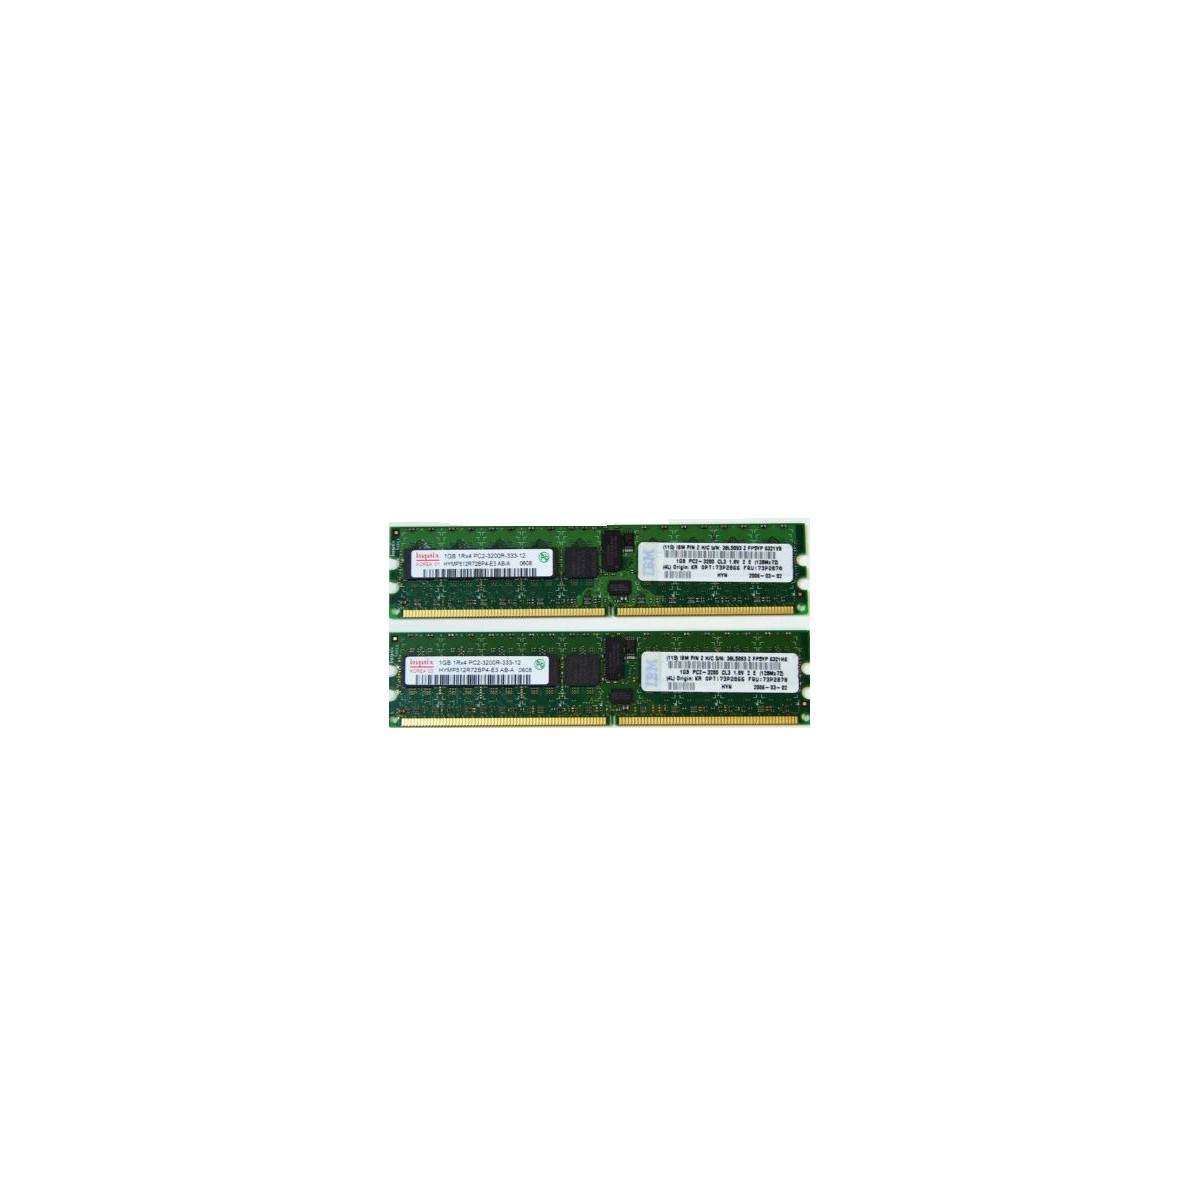 PAMIEC IBM 2GB 2x1GB KIT PC2-3200 30R5090